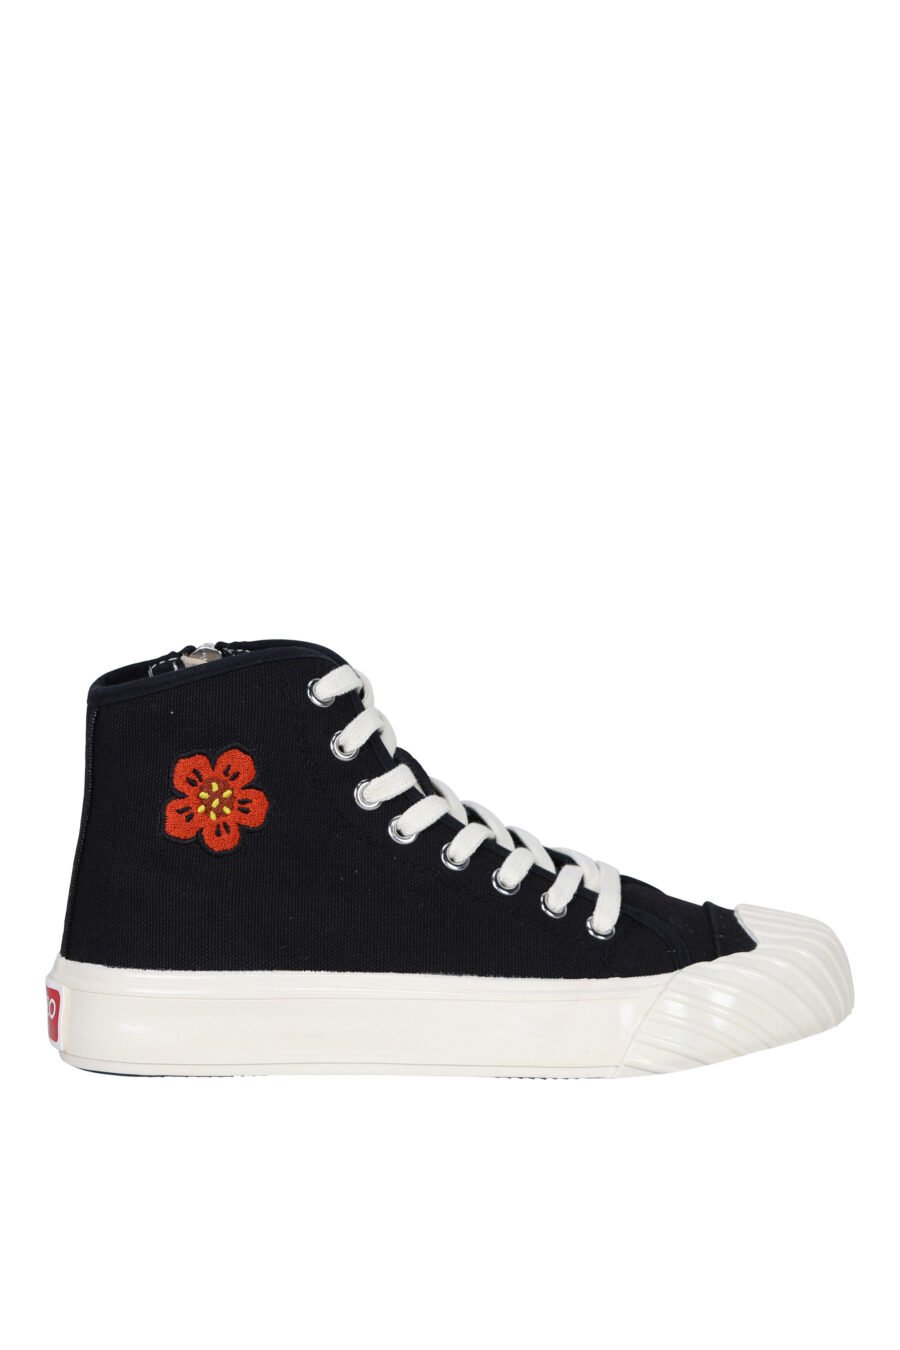 Zapatillas negras altas "kenzo school" con logo "boke flower" - 3612230423640